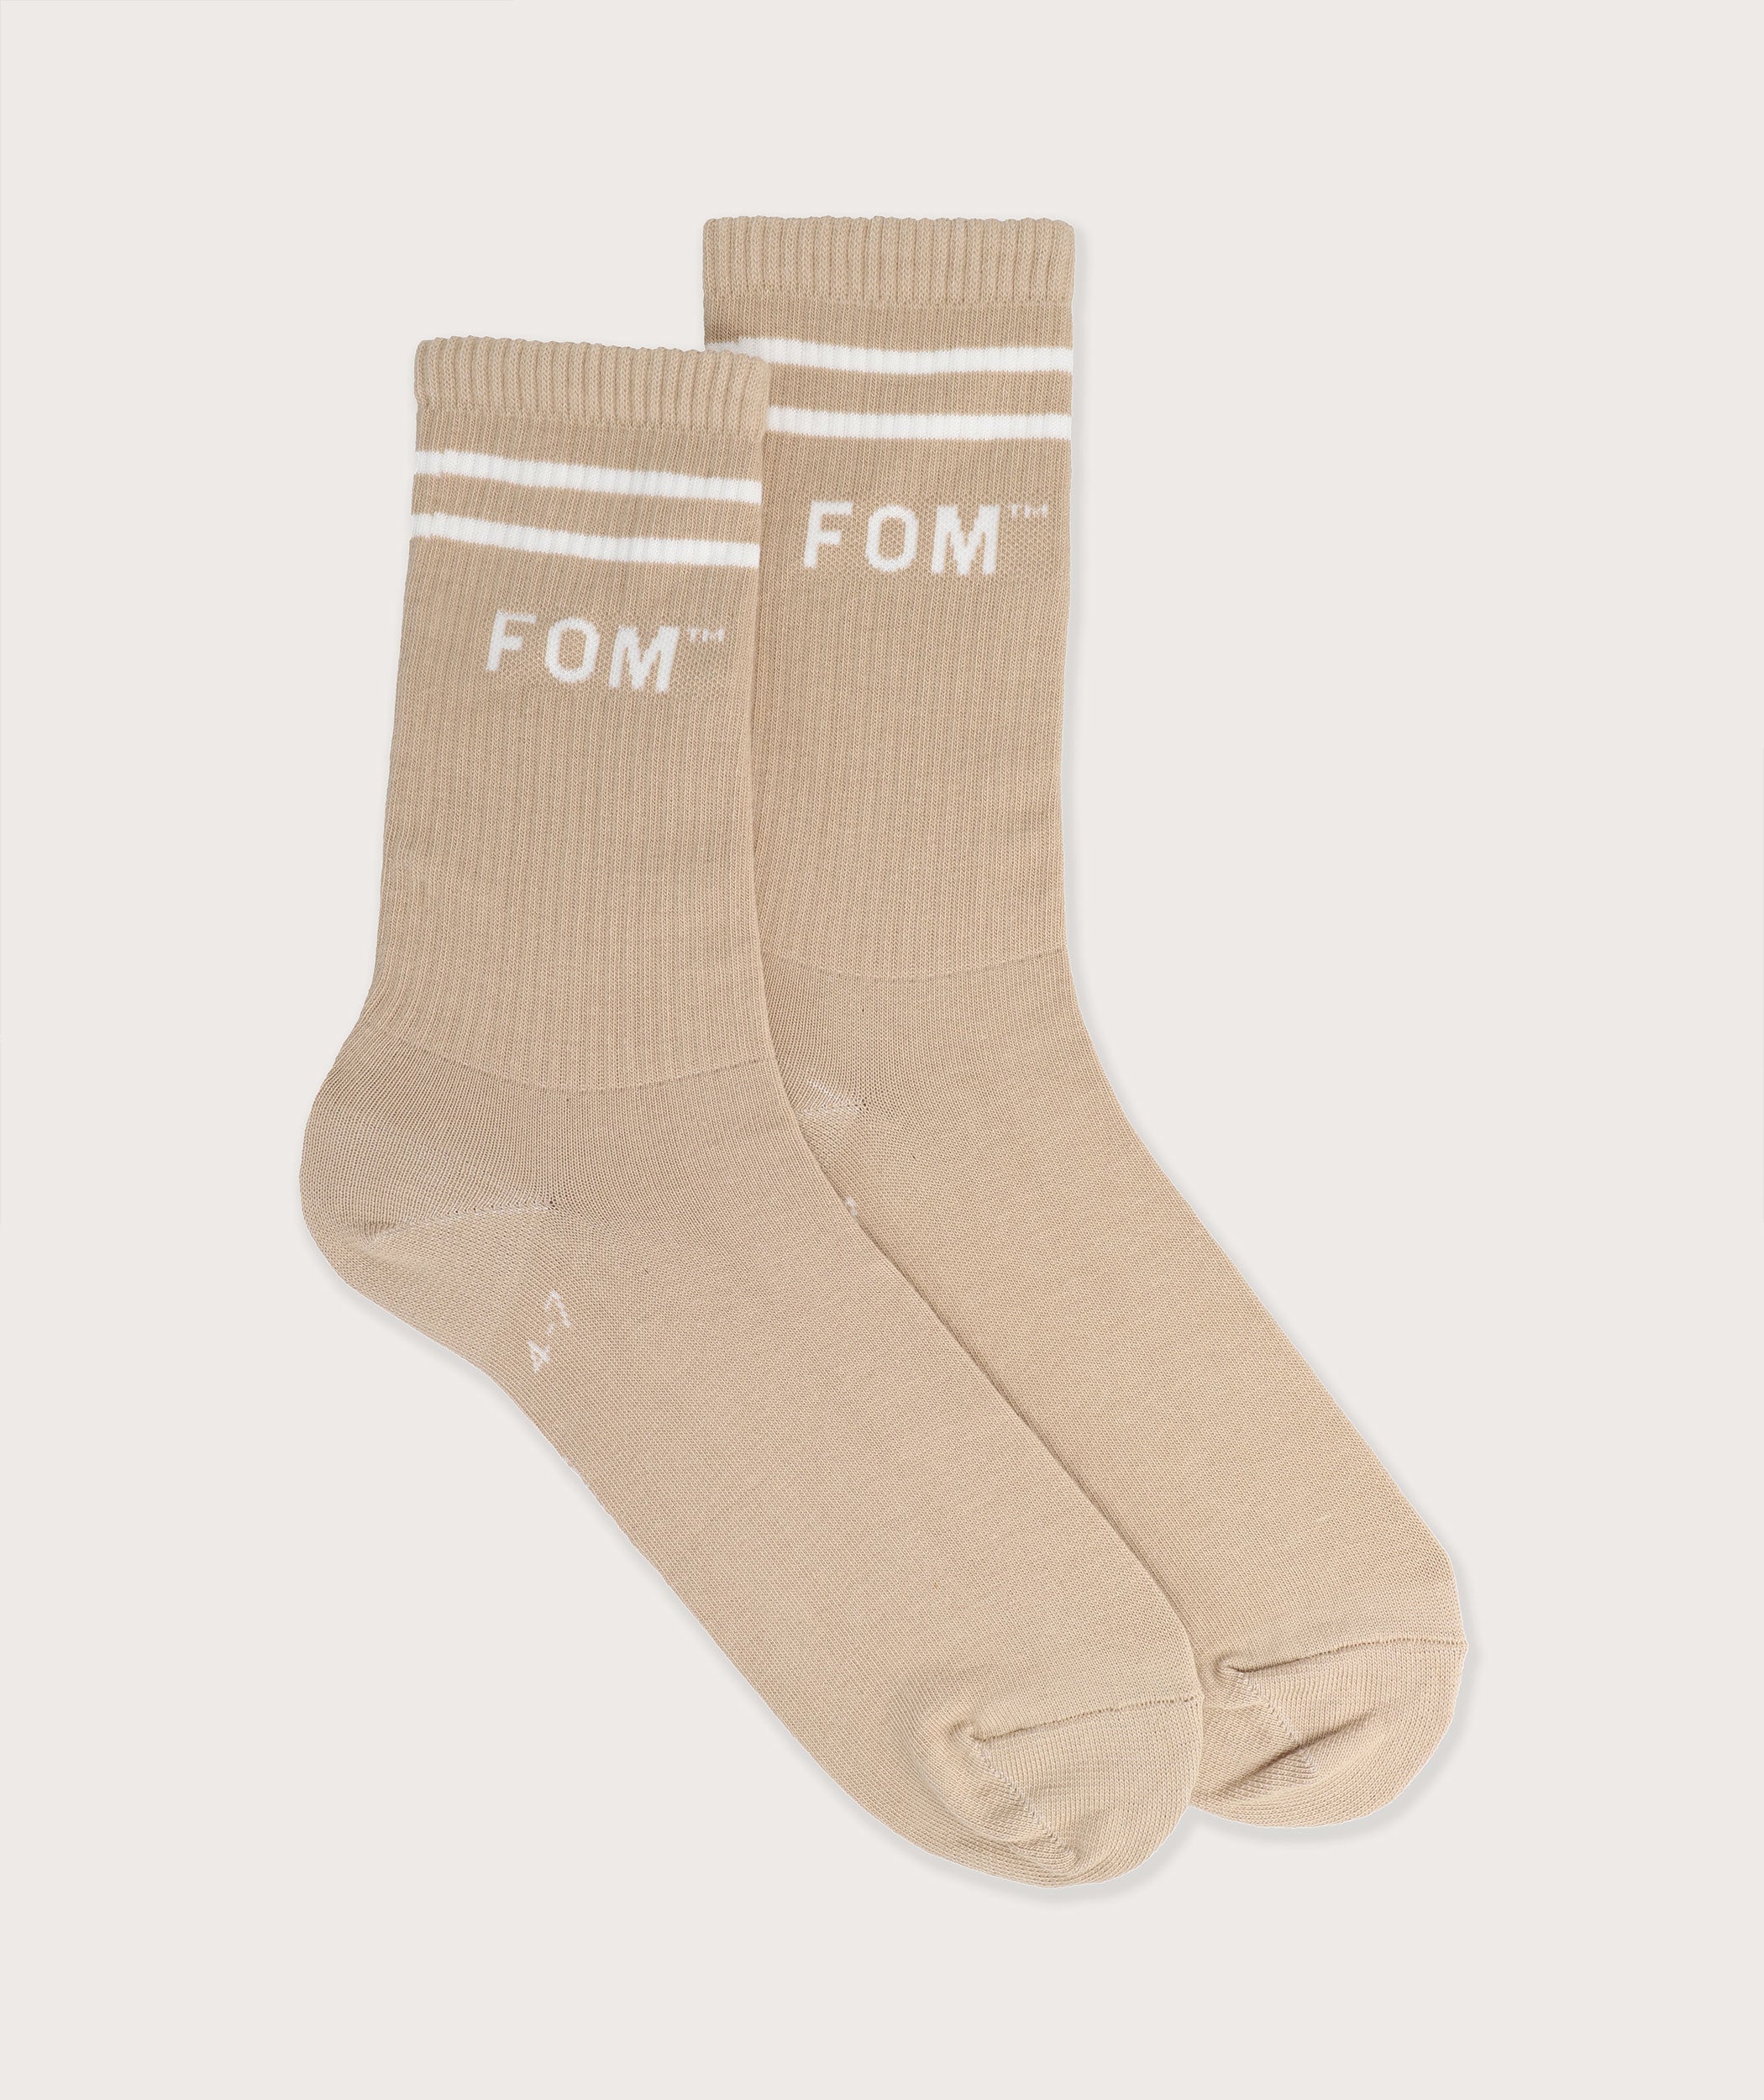 Socks FOM Crew Stone / White Stripes (Size 4-7)